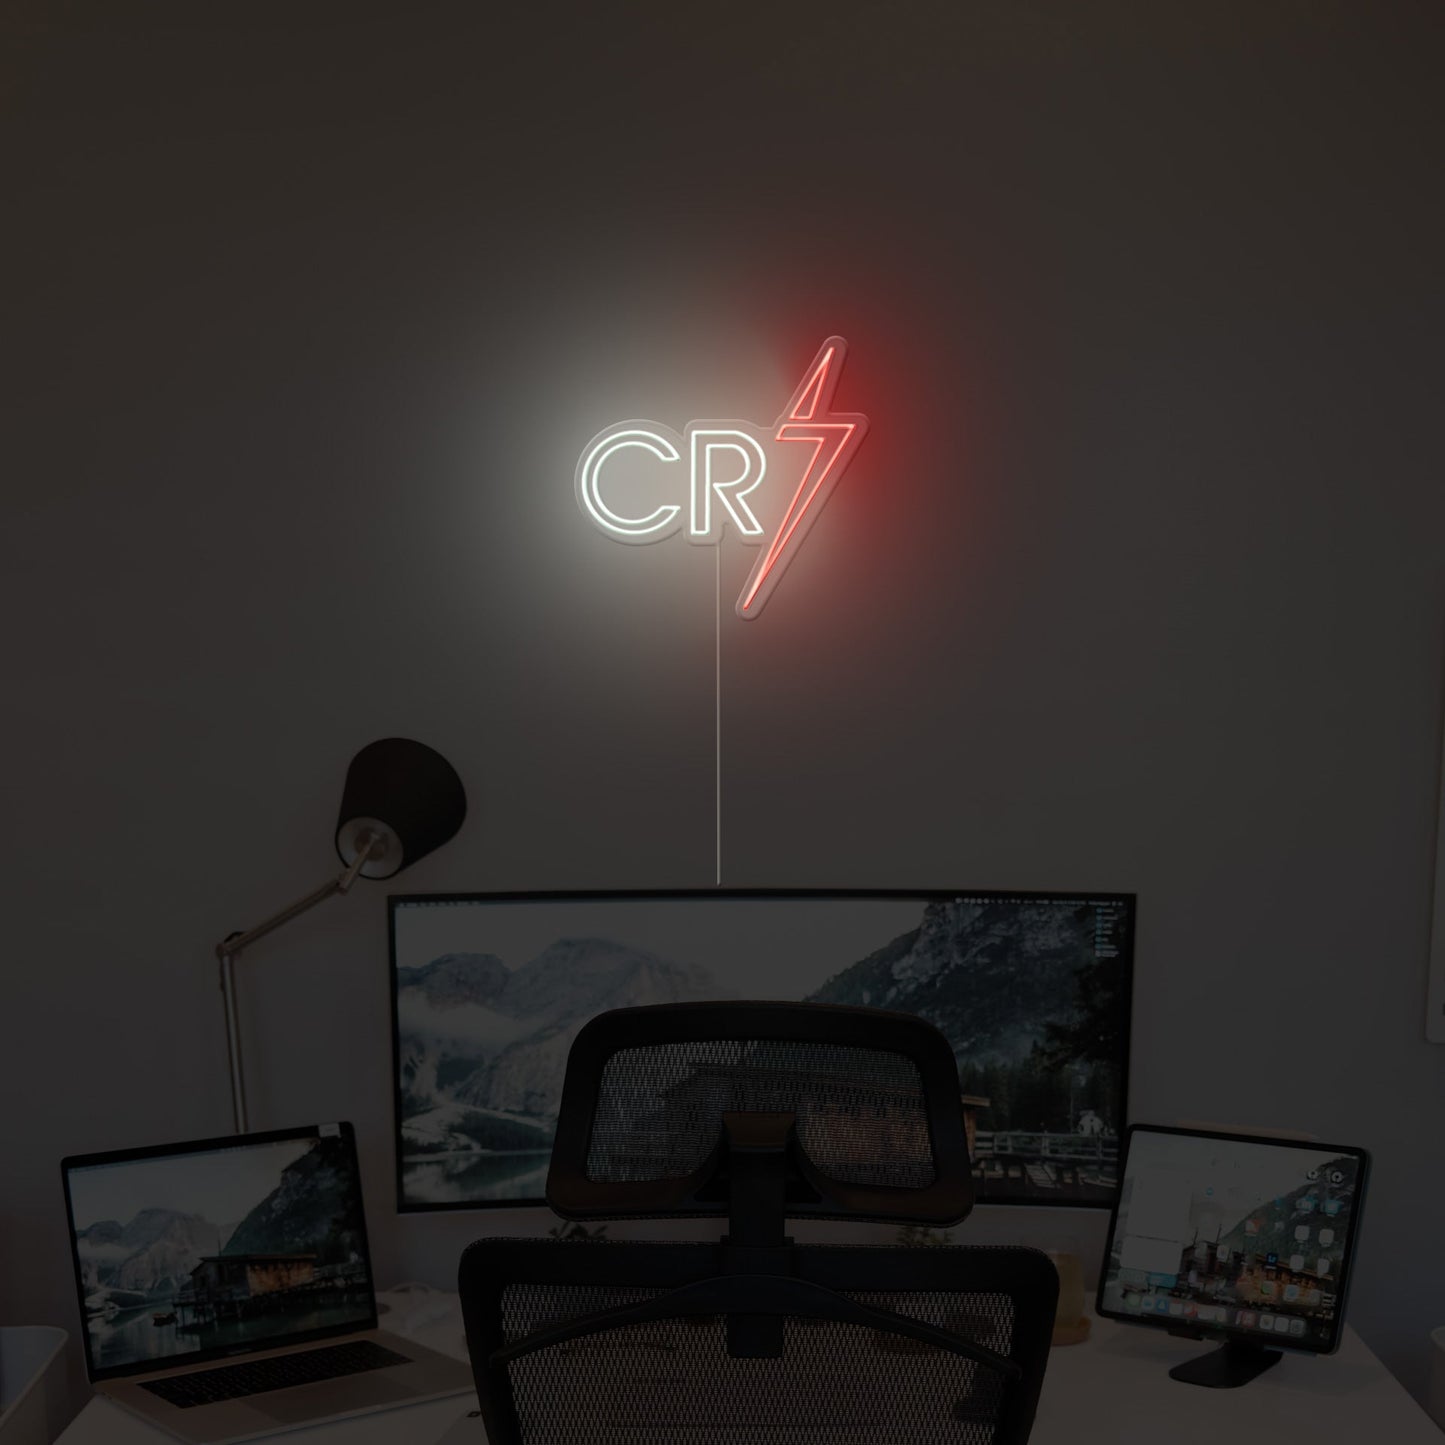 cr7-neon-sign